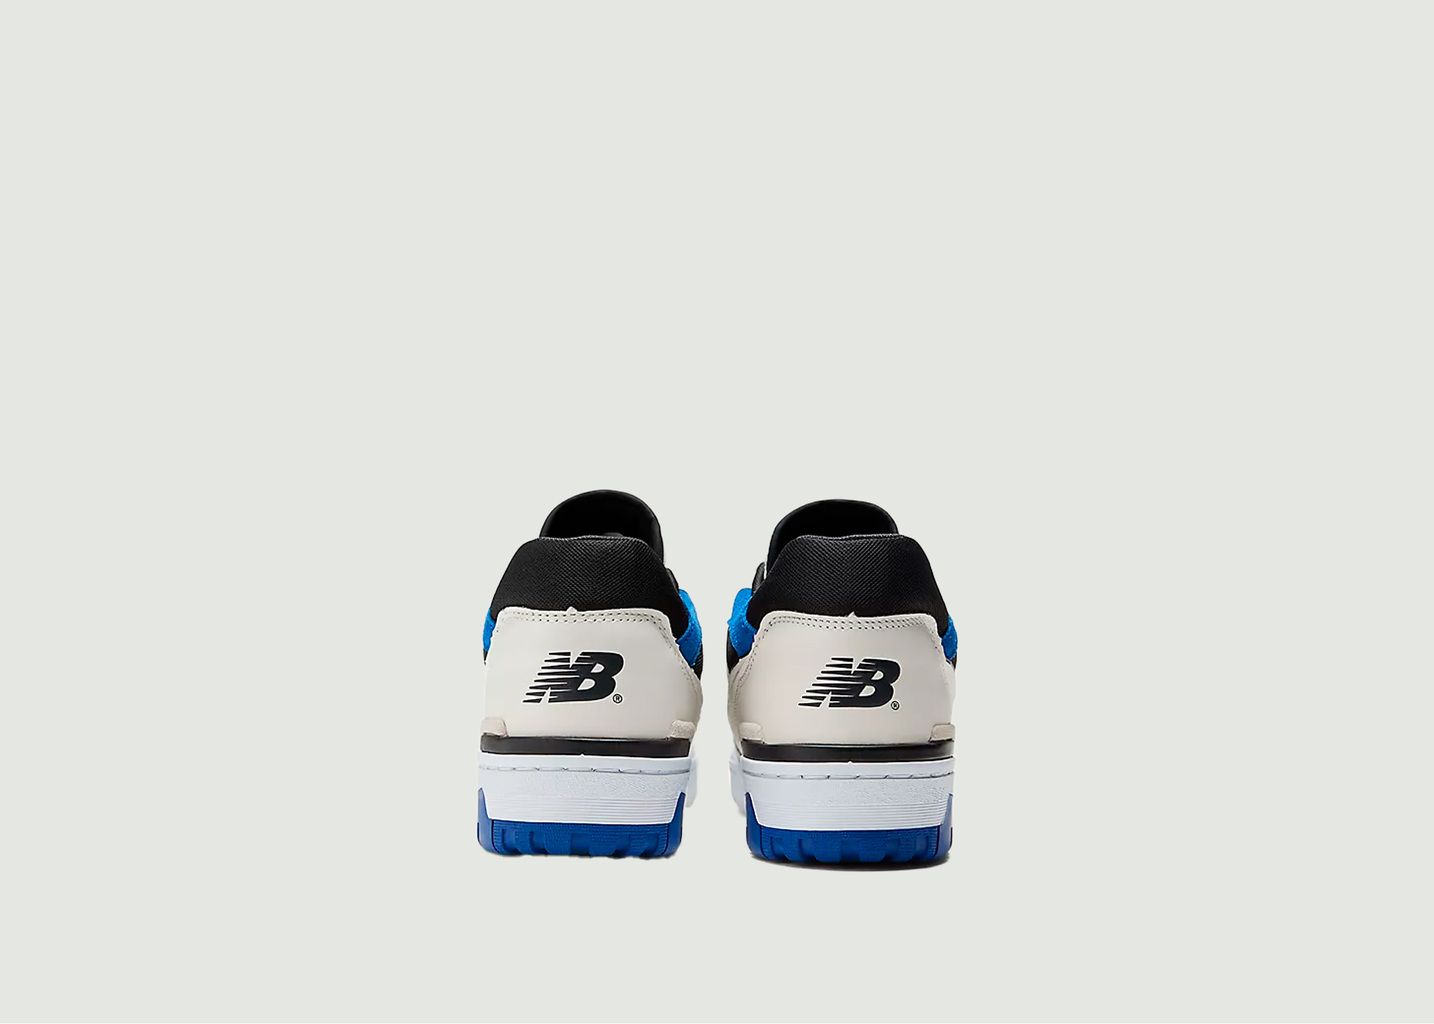 BB550 Sneakers - New Balance